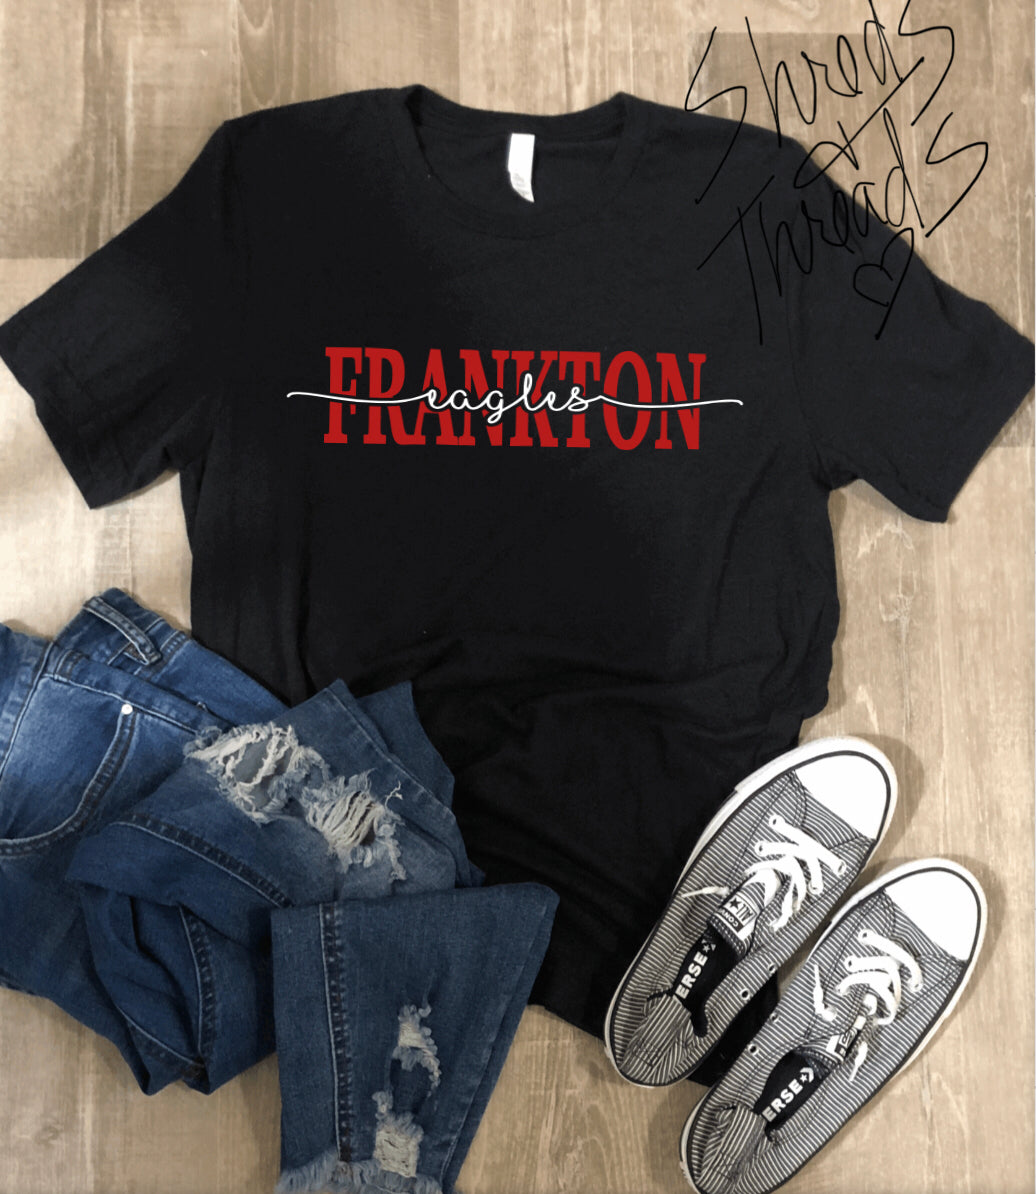 Frankton Eagles (black shirt)